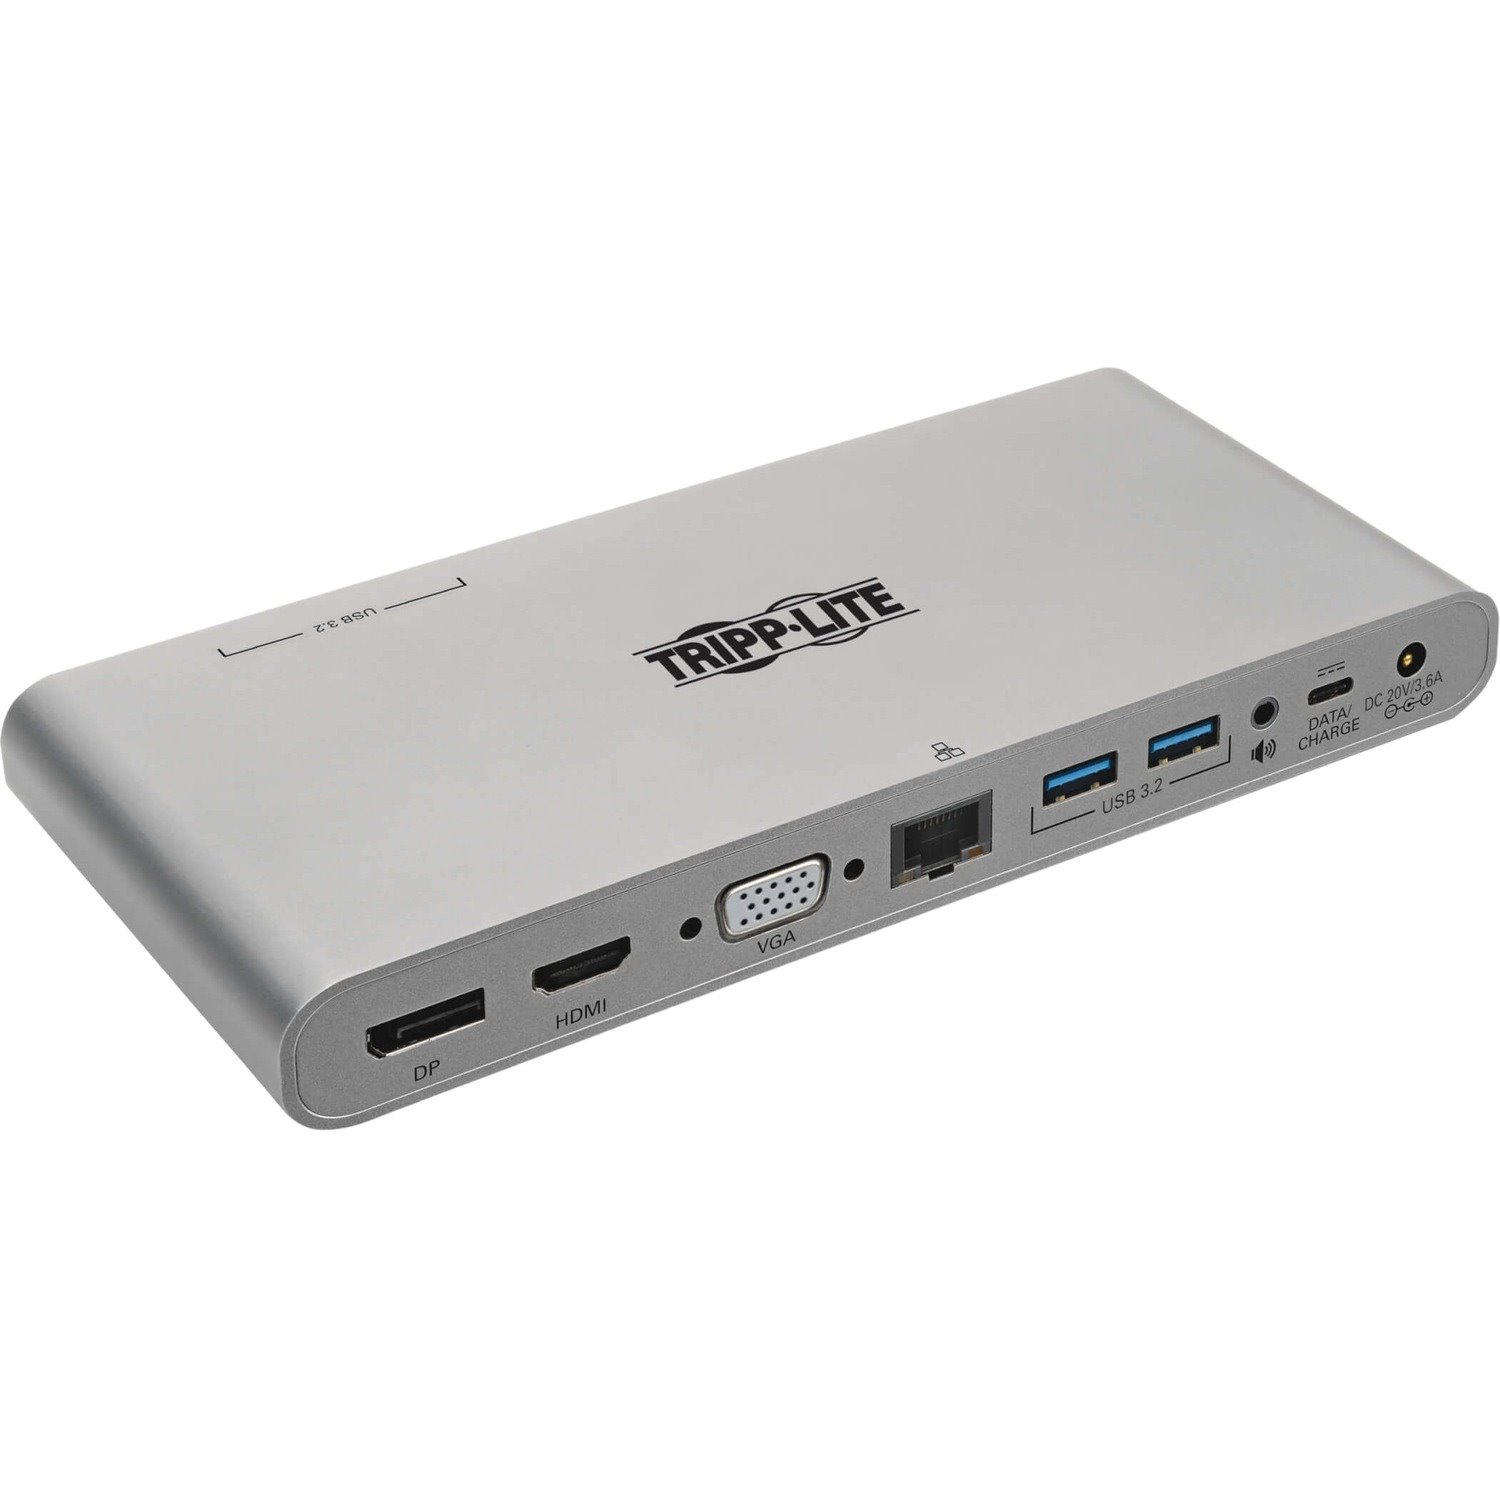 Tripp Lite by Eaton USB-C Dock, Triple Display - 4K HDMI/DisplayPort, VGA, USB 3.x (5Gbps), USB-A/C Hub Ports, GbE, 100W PD Charging, EU/UK Power Supply